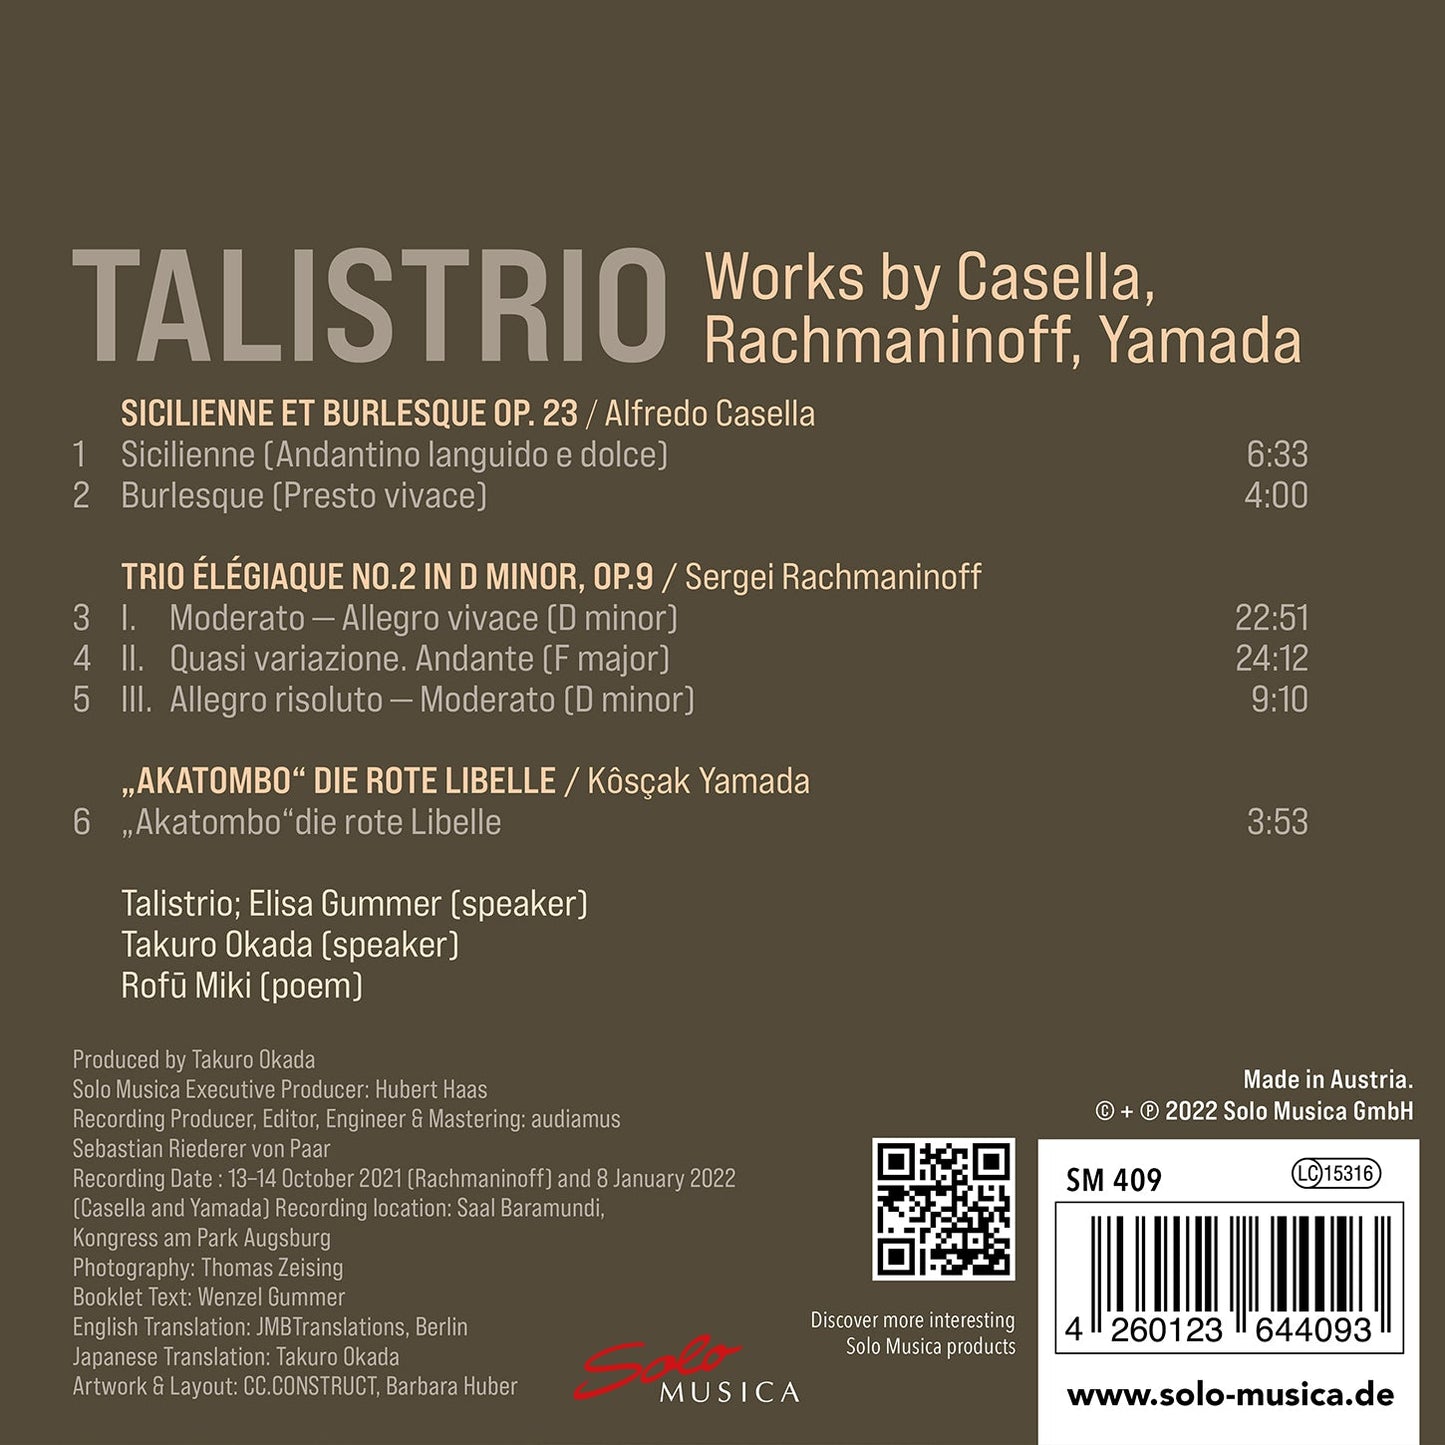 Casella, Rachmaninoff & Yamada: Works